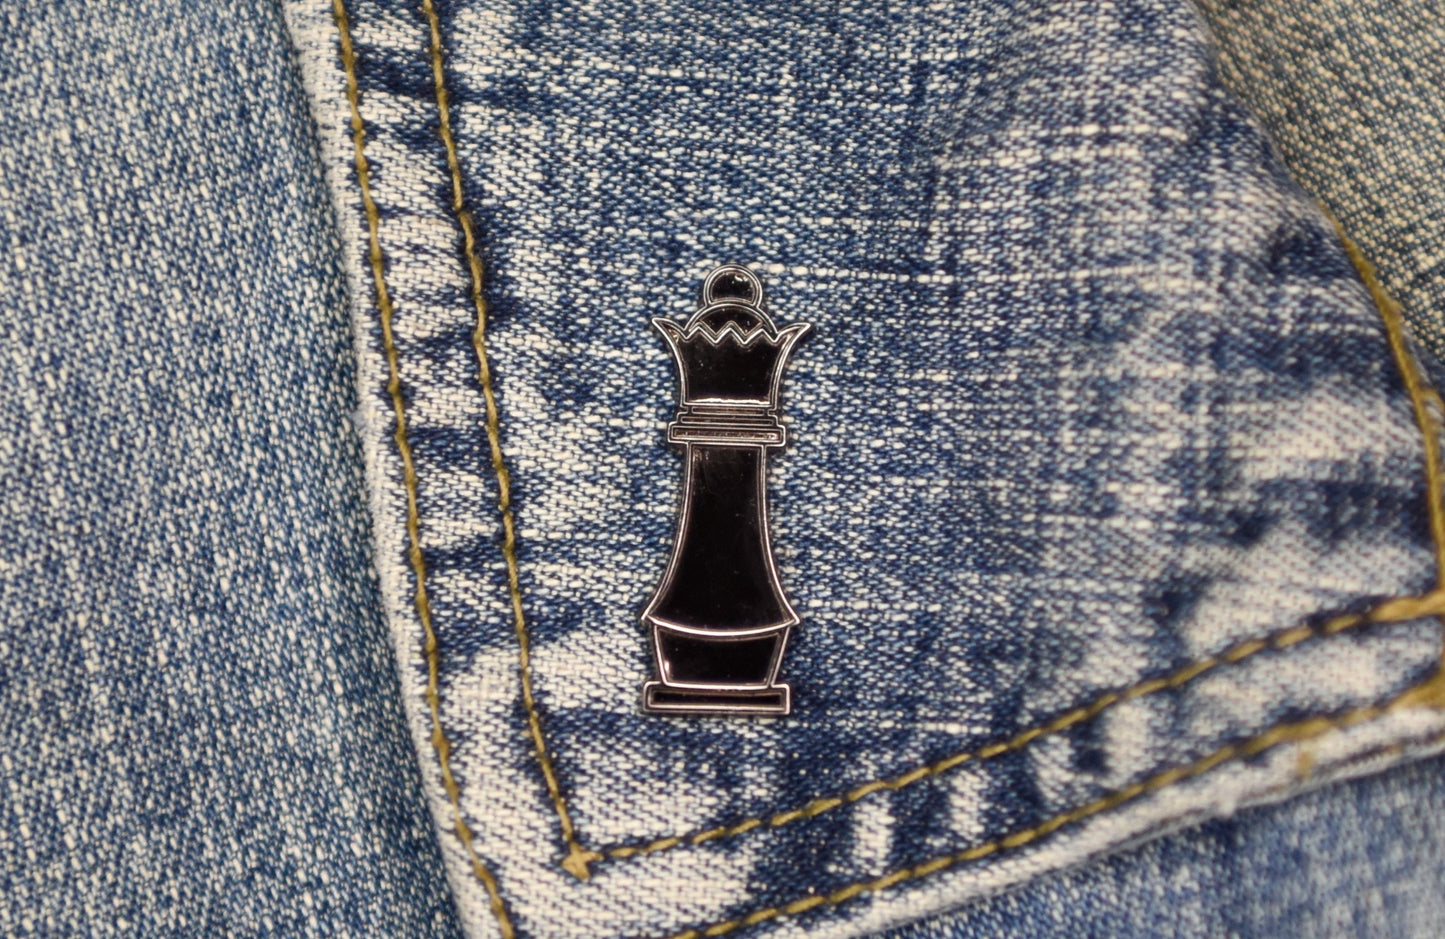 Queen Chess Piece Pin